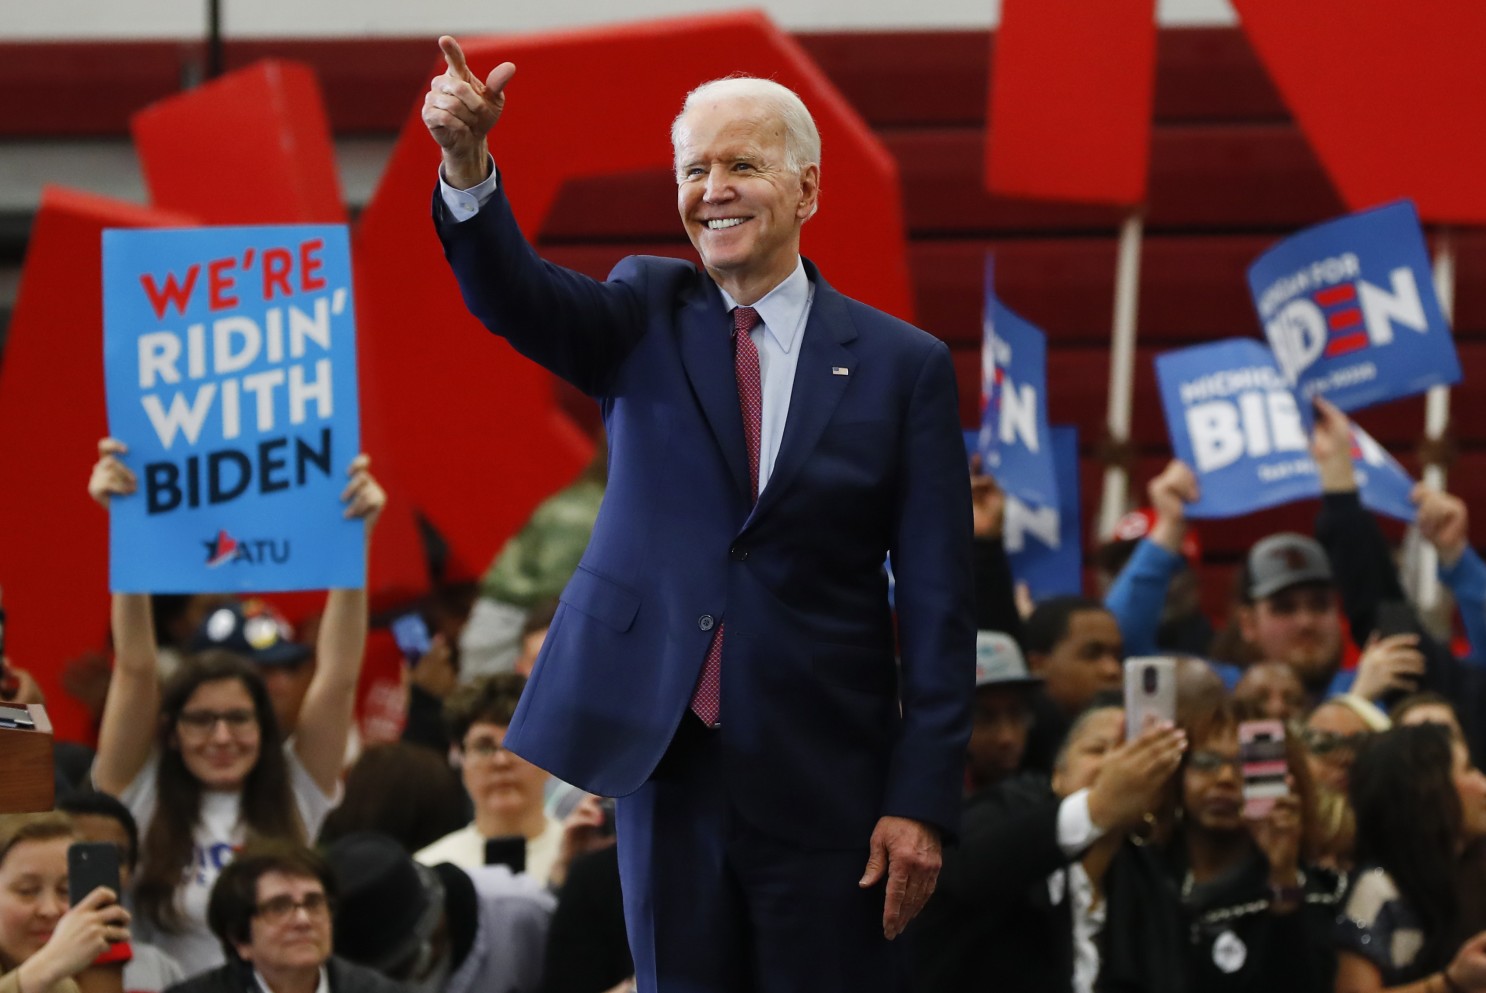 Watch: Joe Biden “Were going to win”